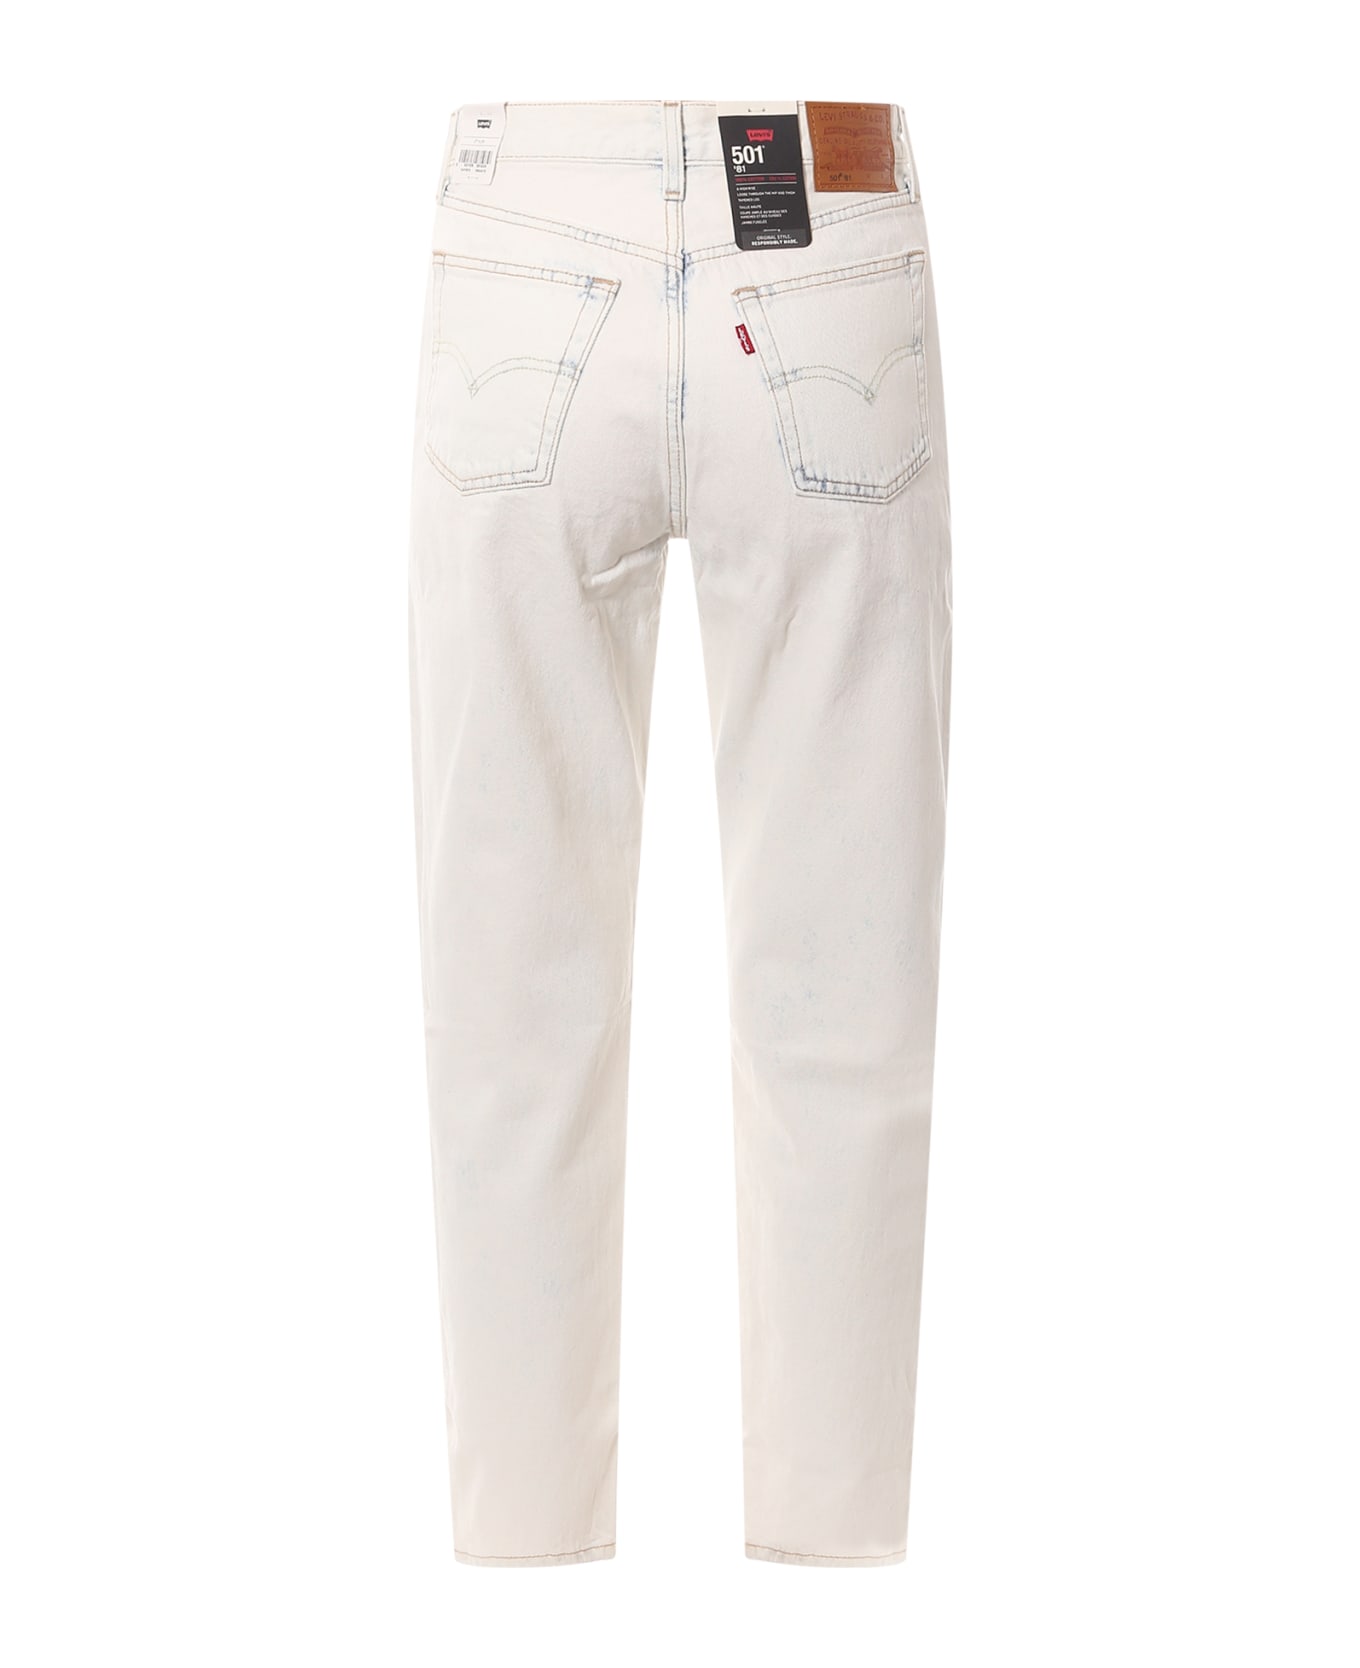 Levi's 501 81 Jeans - White デニム